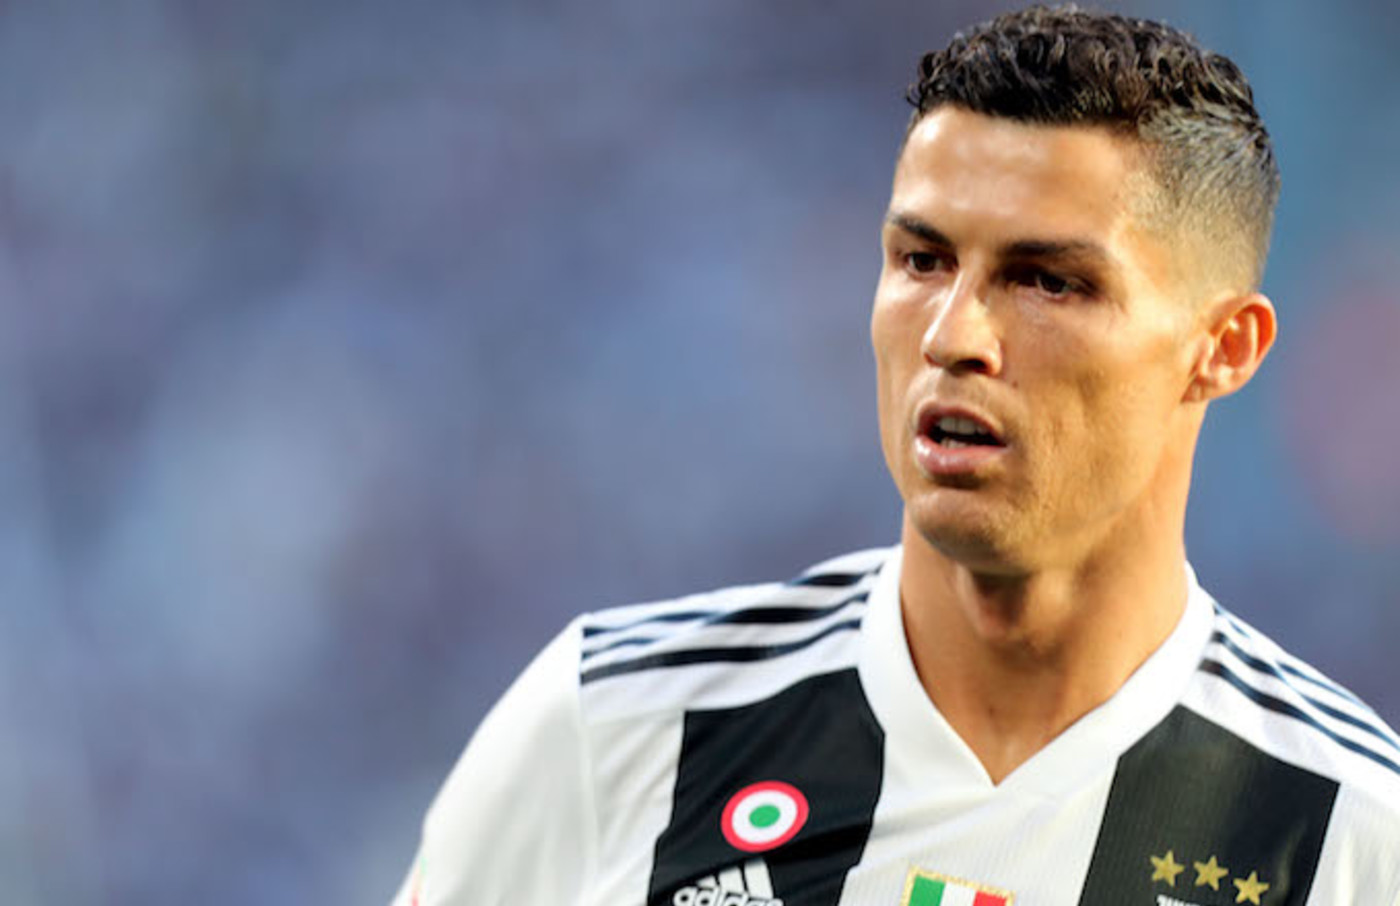 Cristiano Ronaldo Left Off Portugal's National Team After Rape